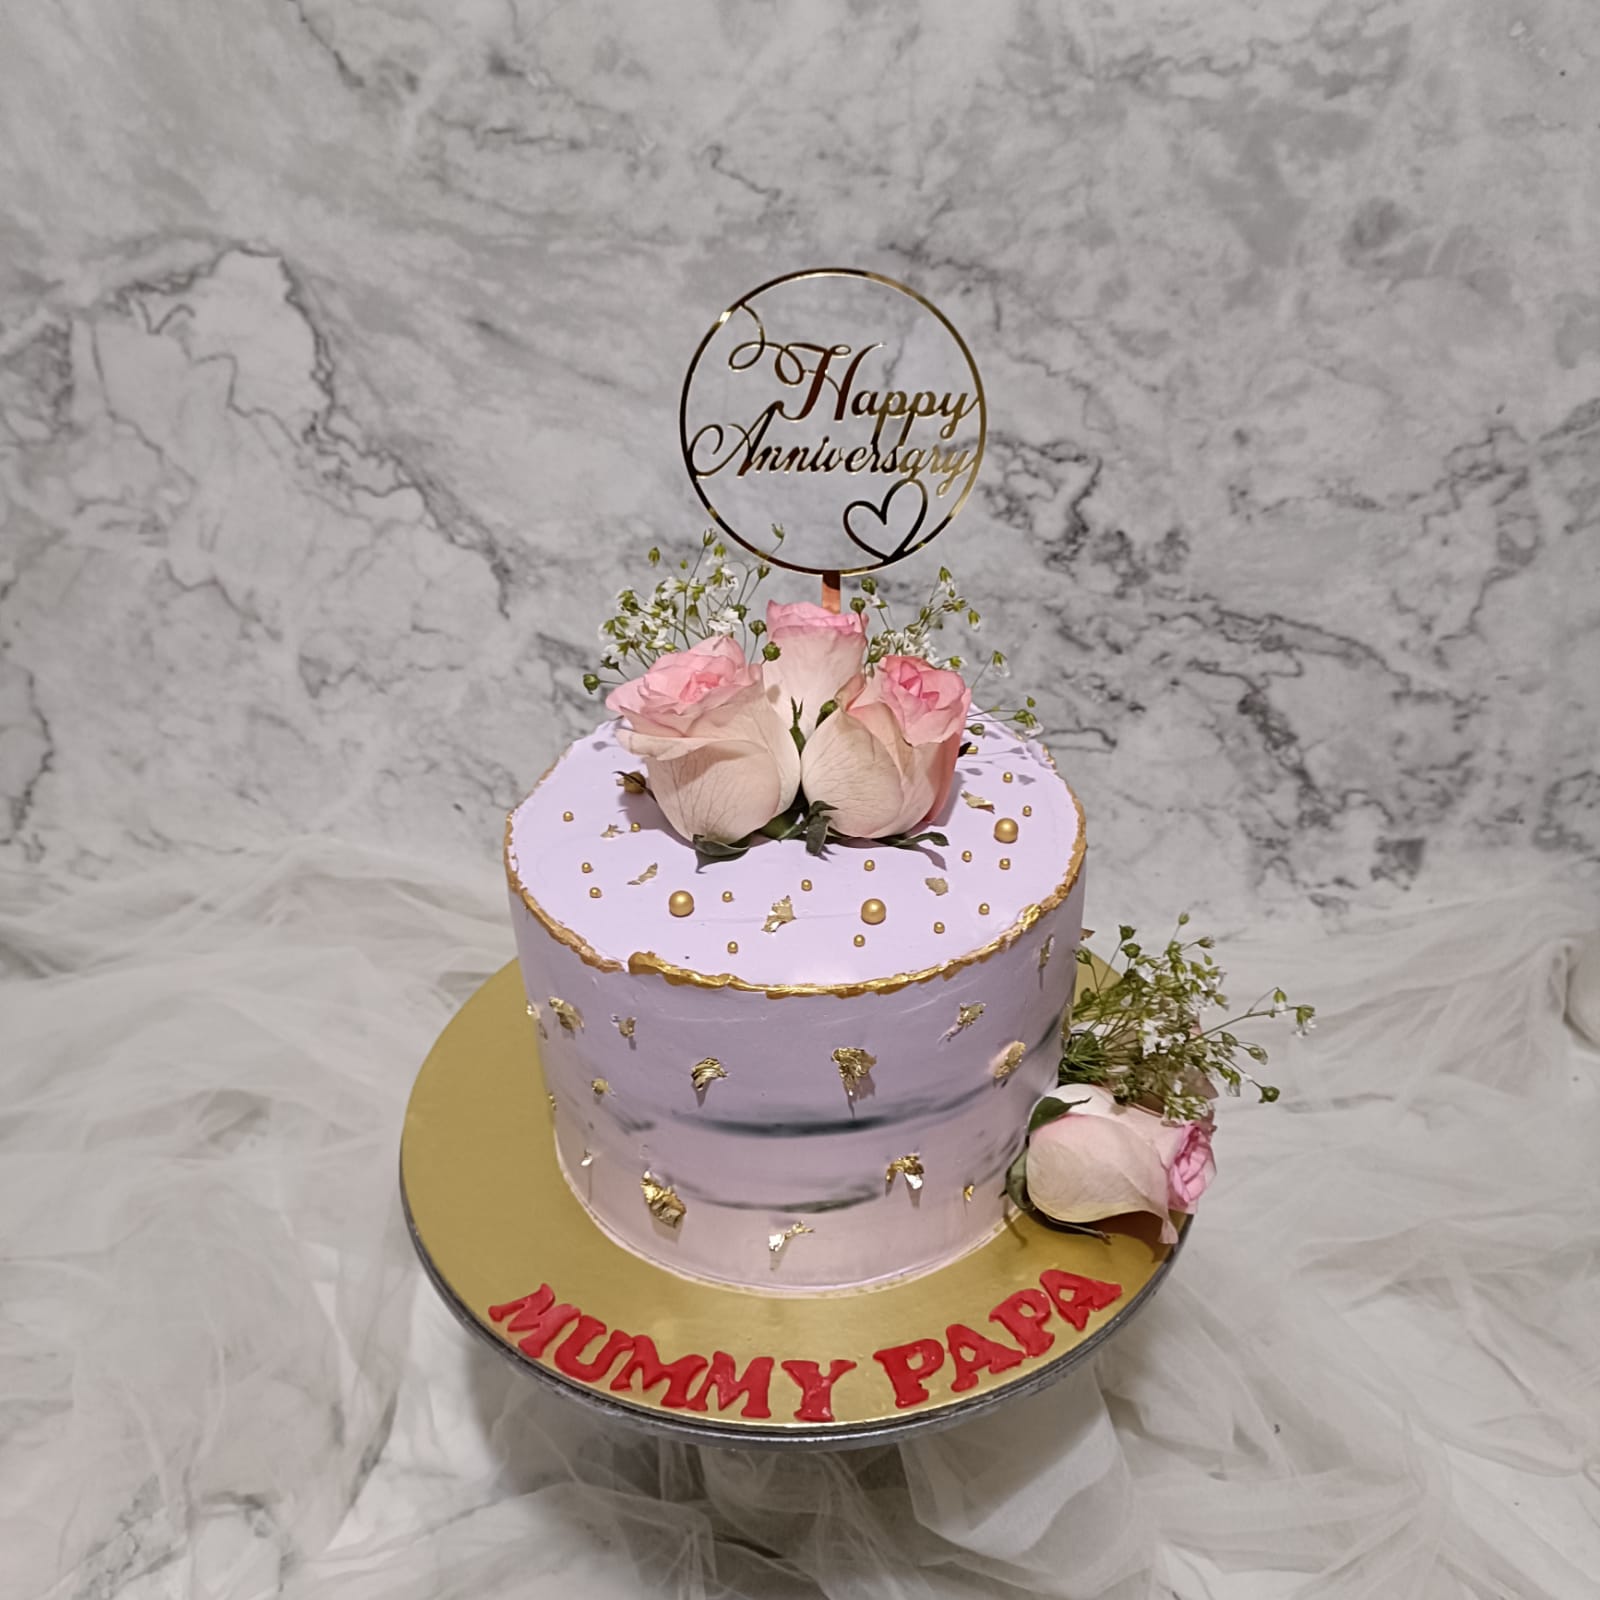 Happy Birthday Shaker Greeting Card! Beautiful Cake and Candles! | eBay-hanic.com.vn